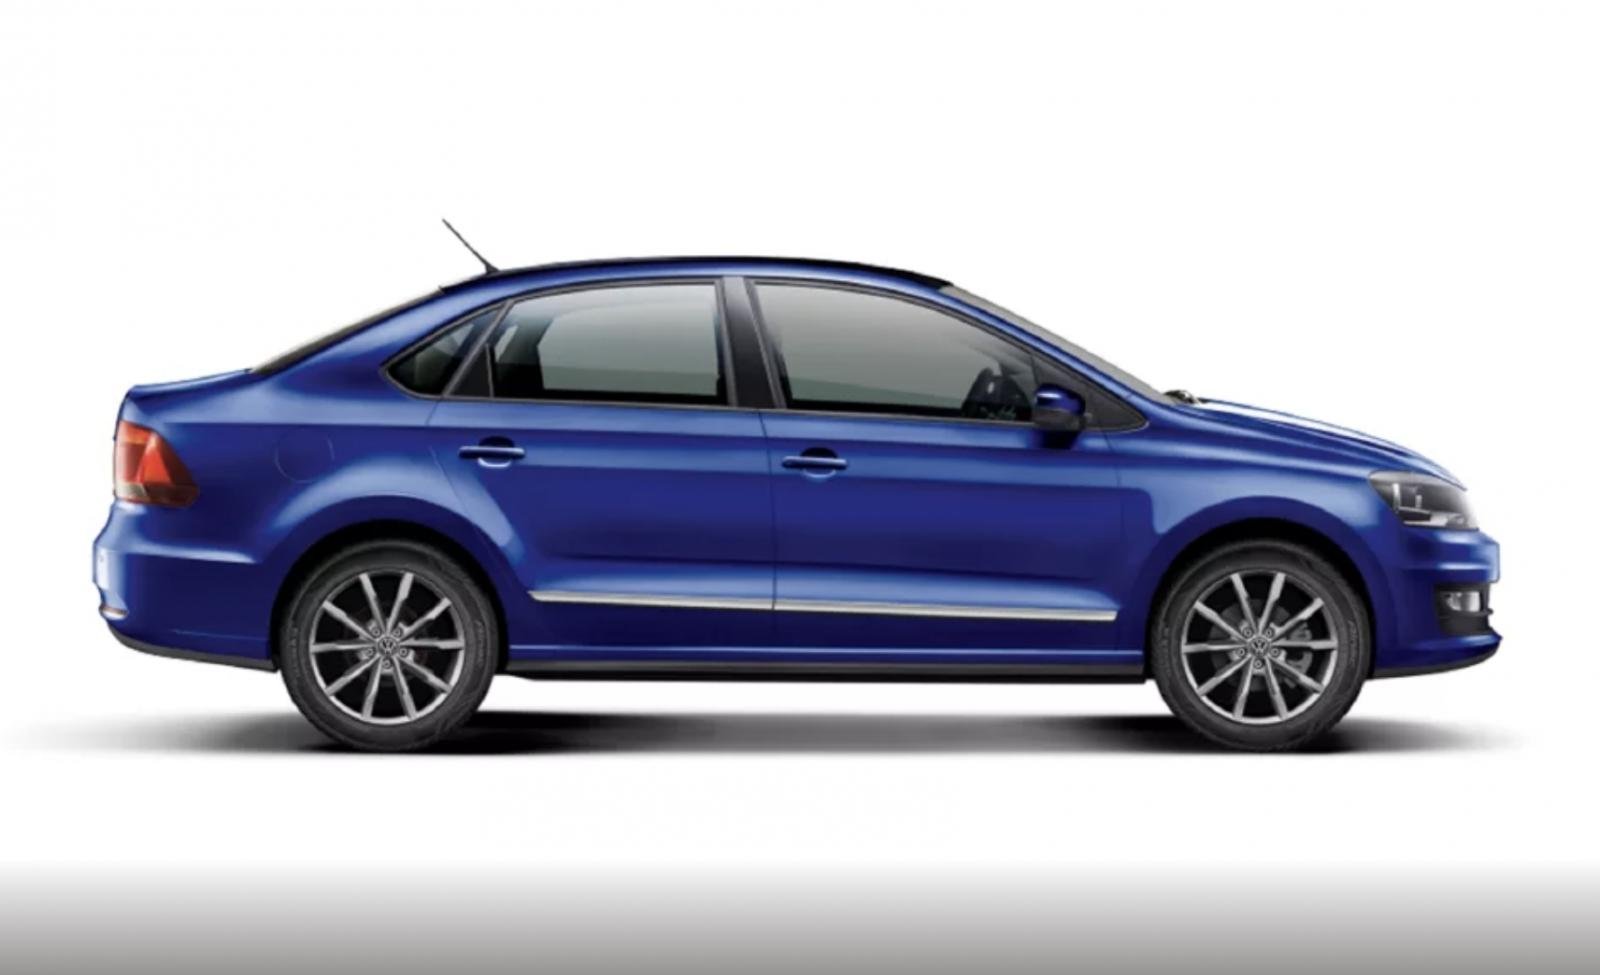 Volkswagen Vento lapiz blue